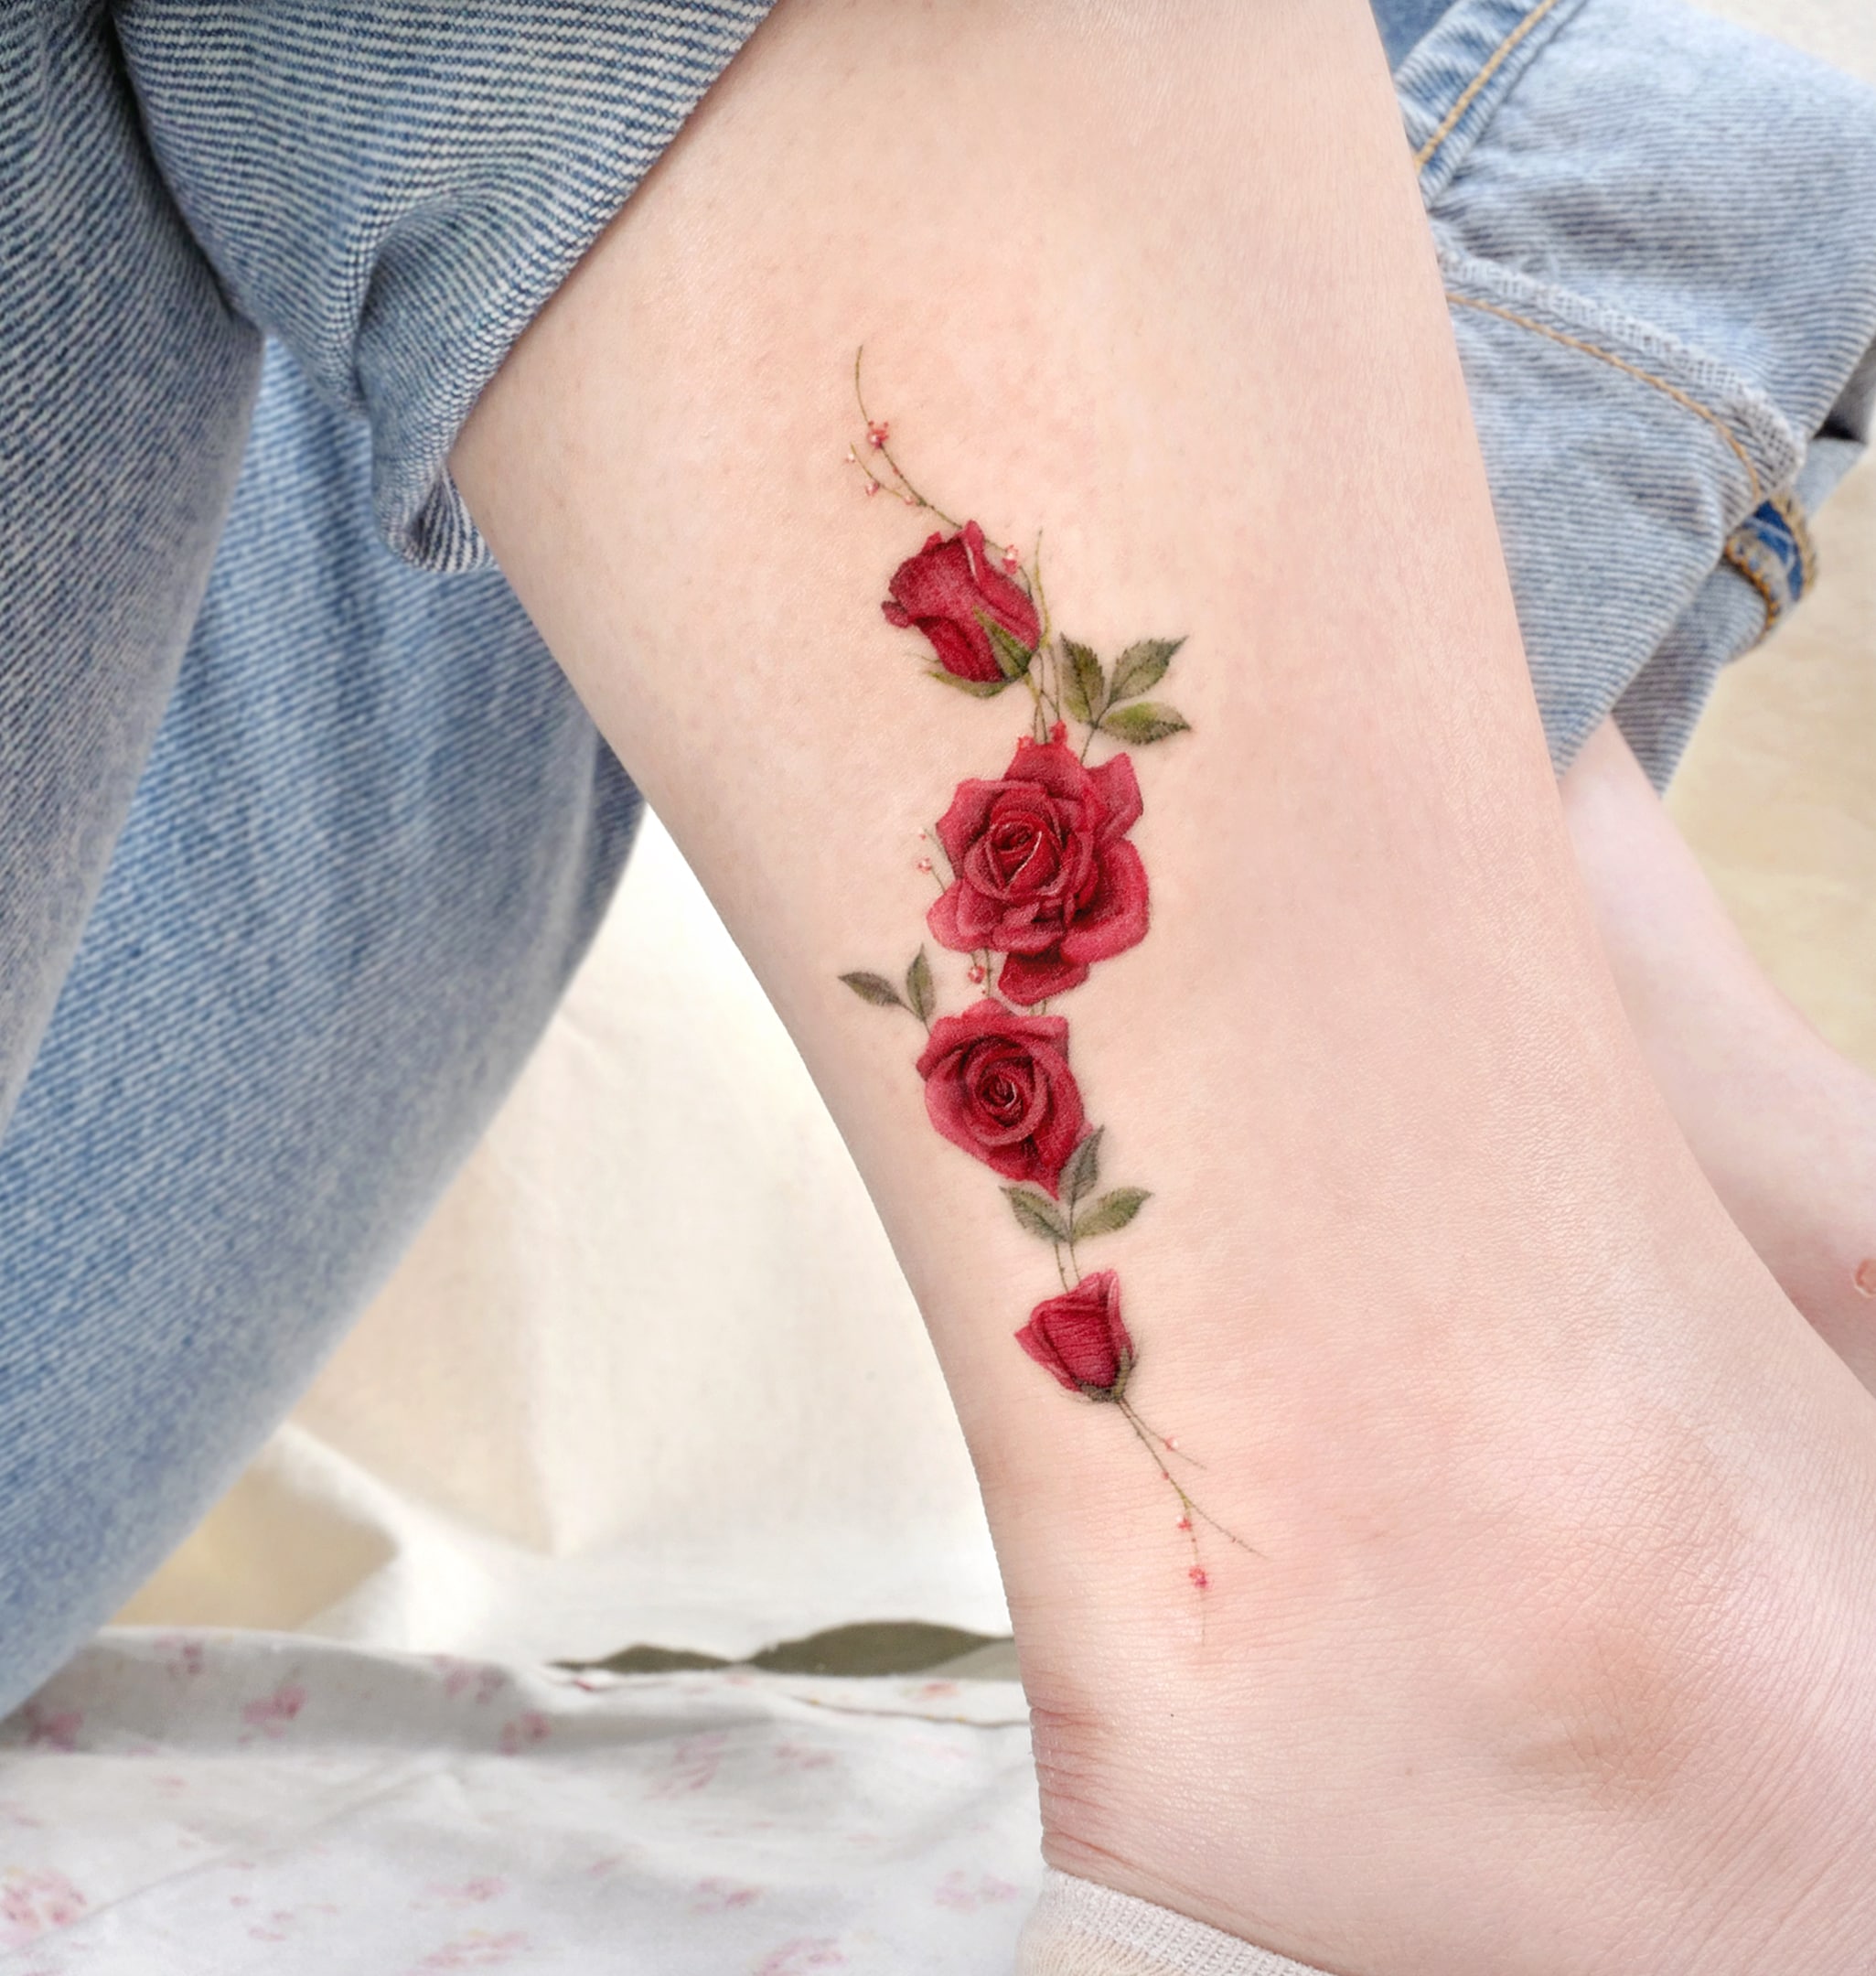 Colorful Tiny Roses tattoo on leg women